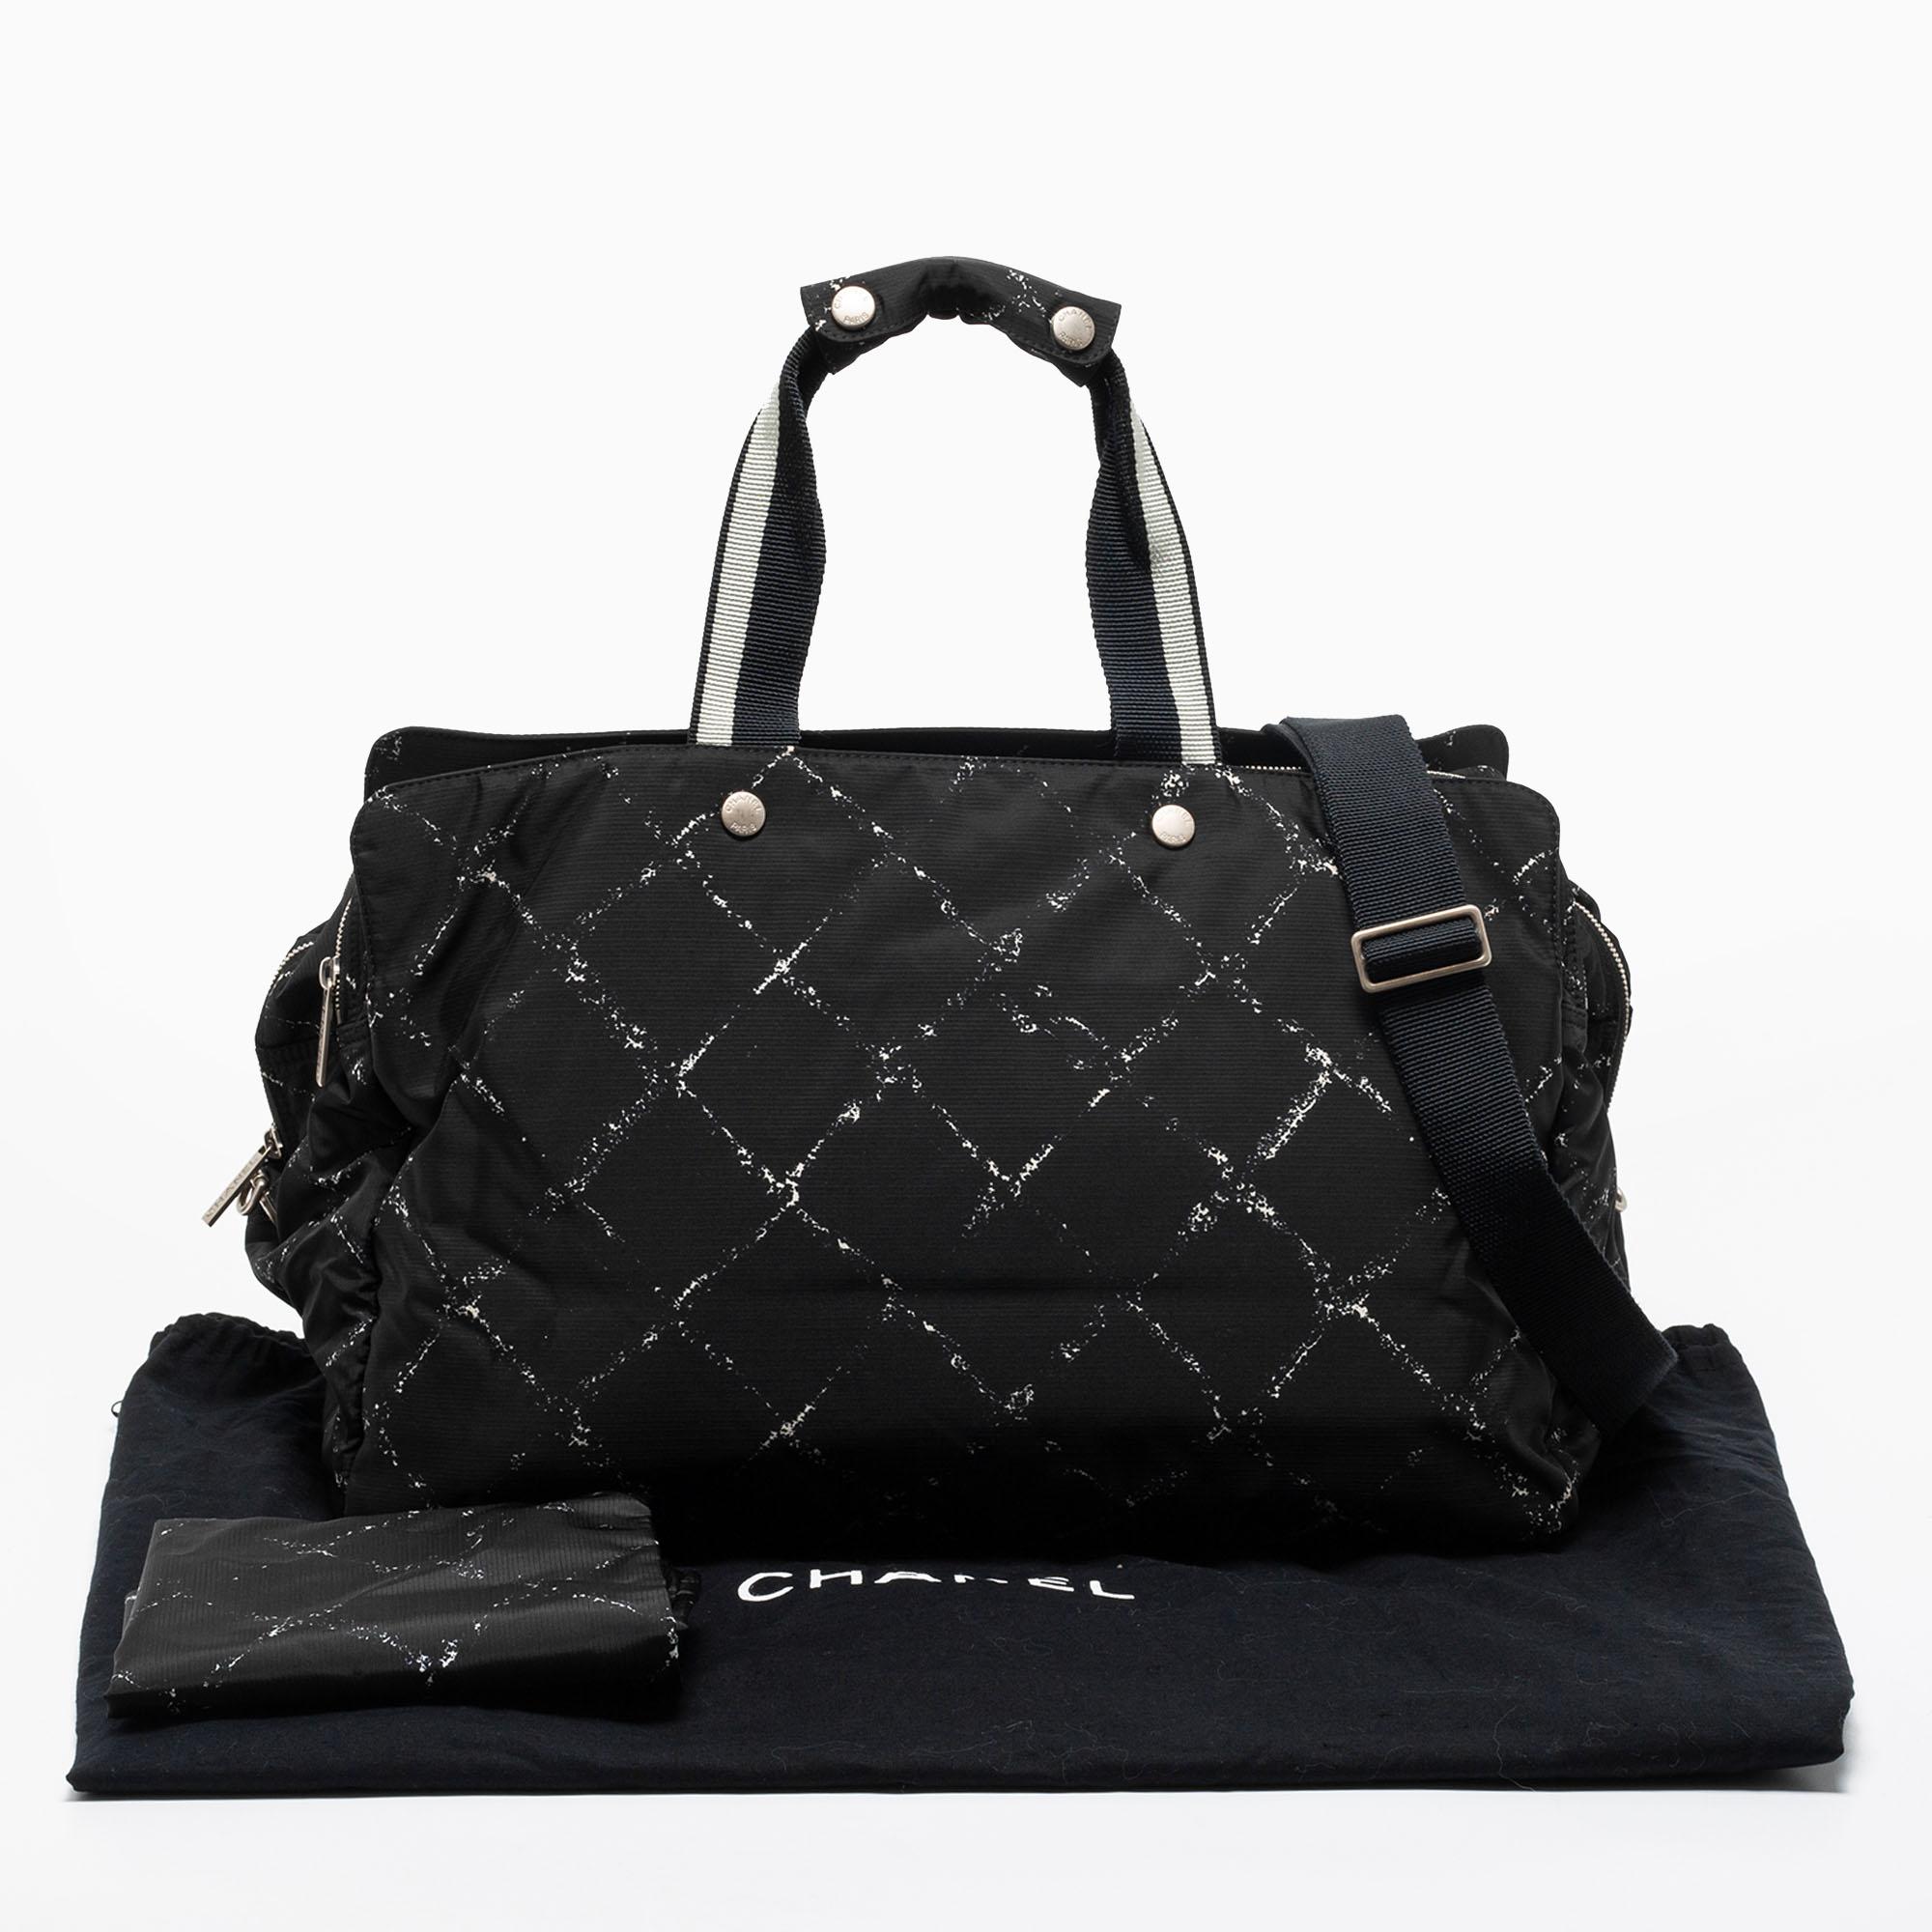 Chanel Black/White Quilted Print Nylon Travel Line Duffel Bag 11